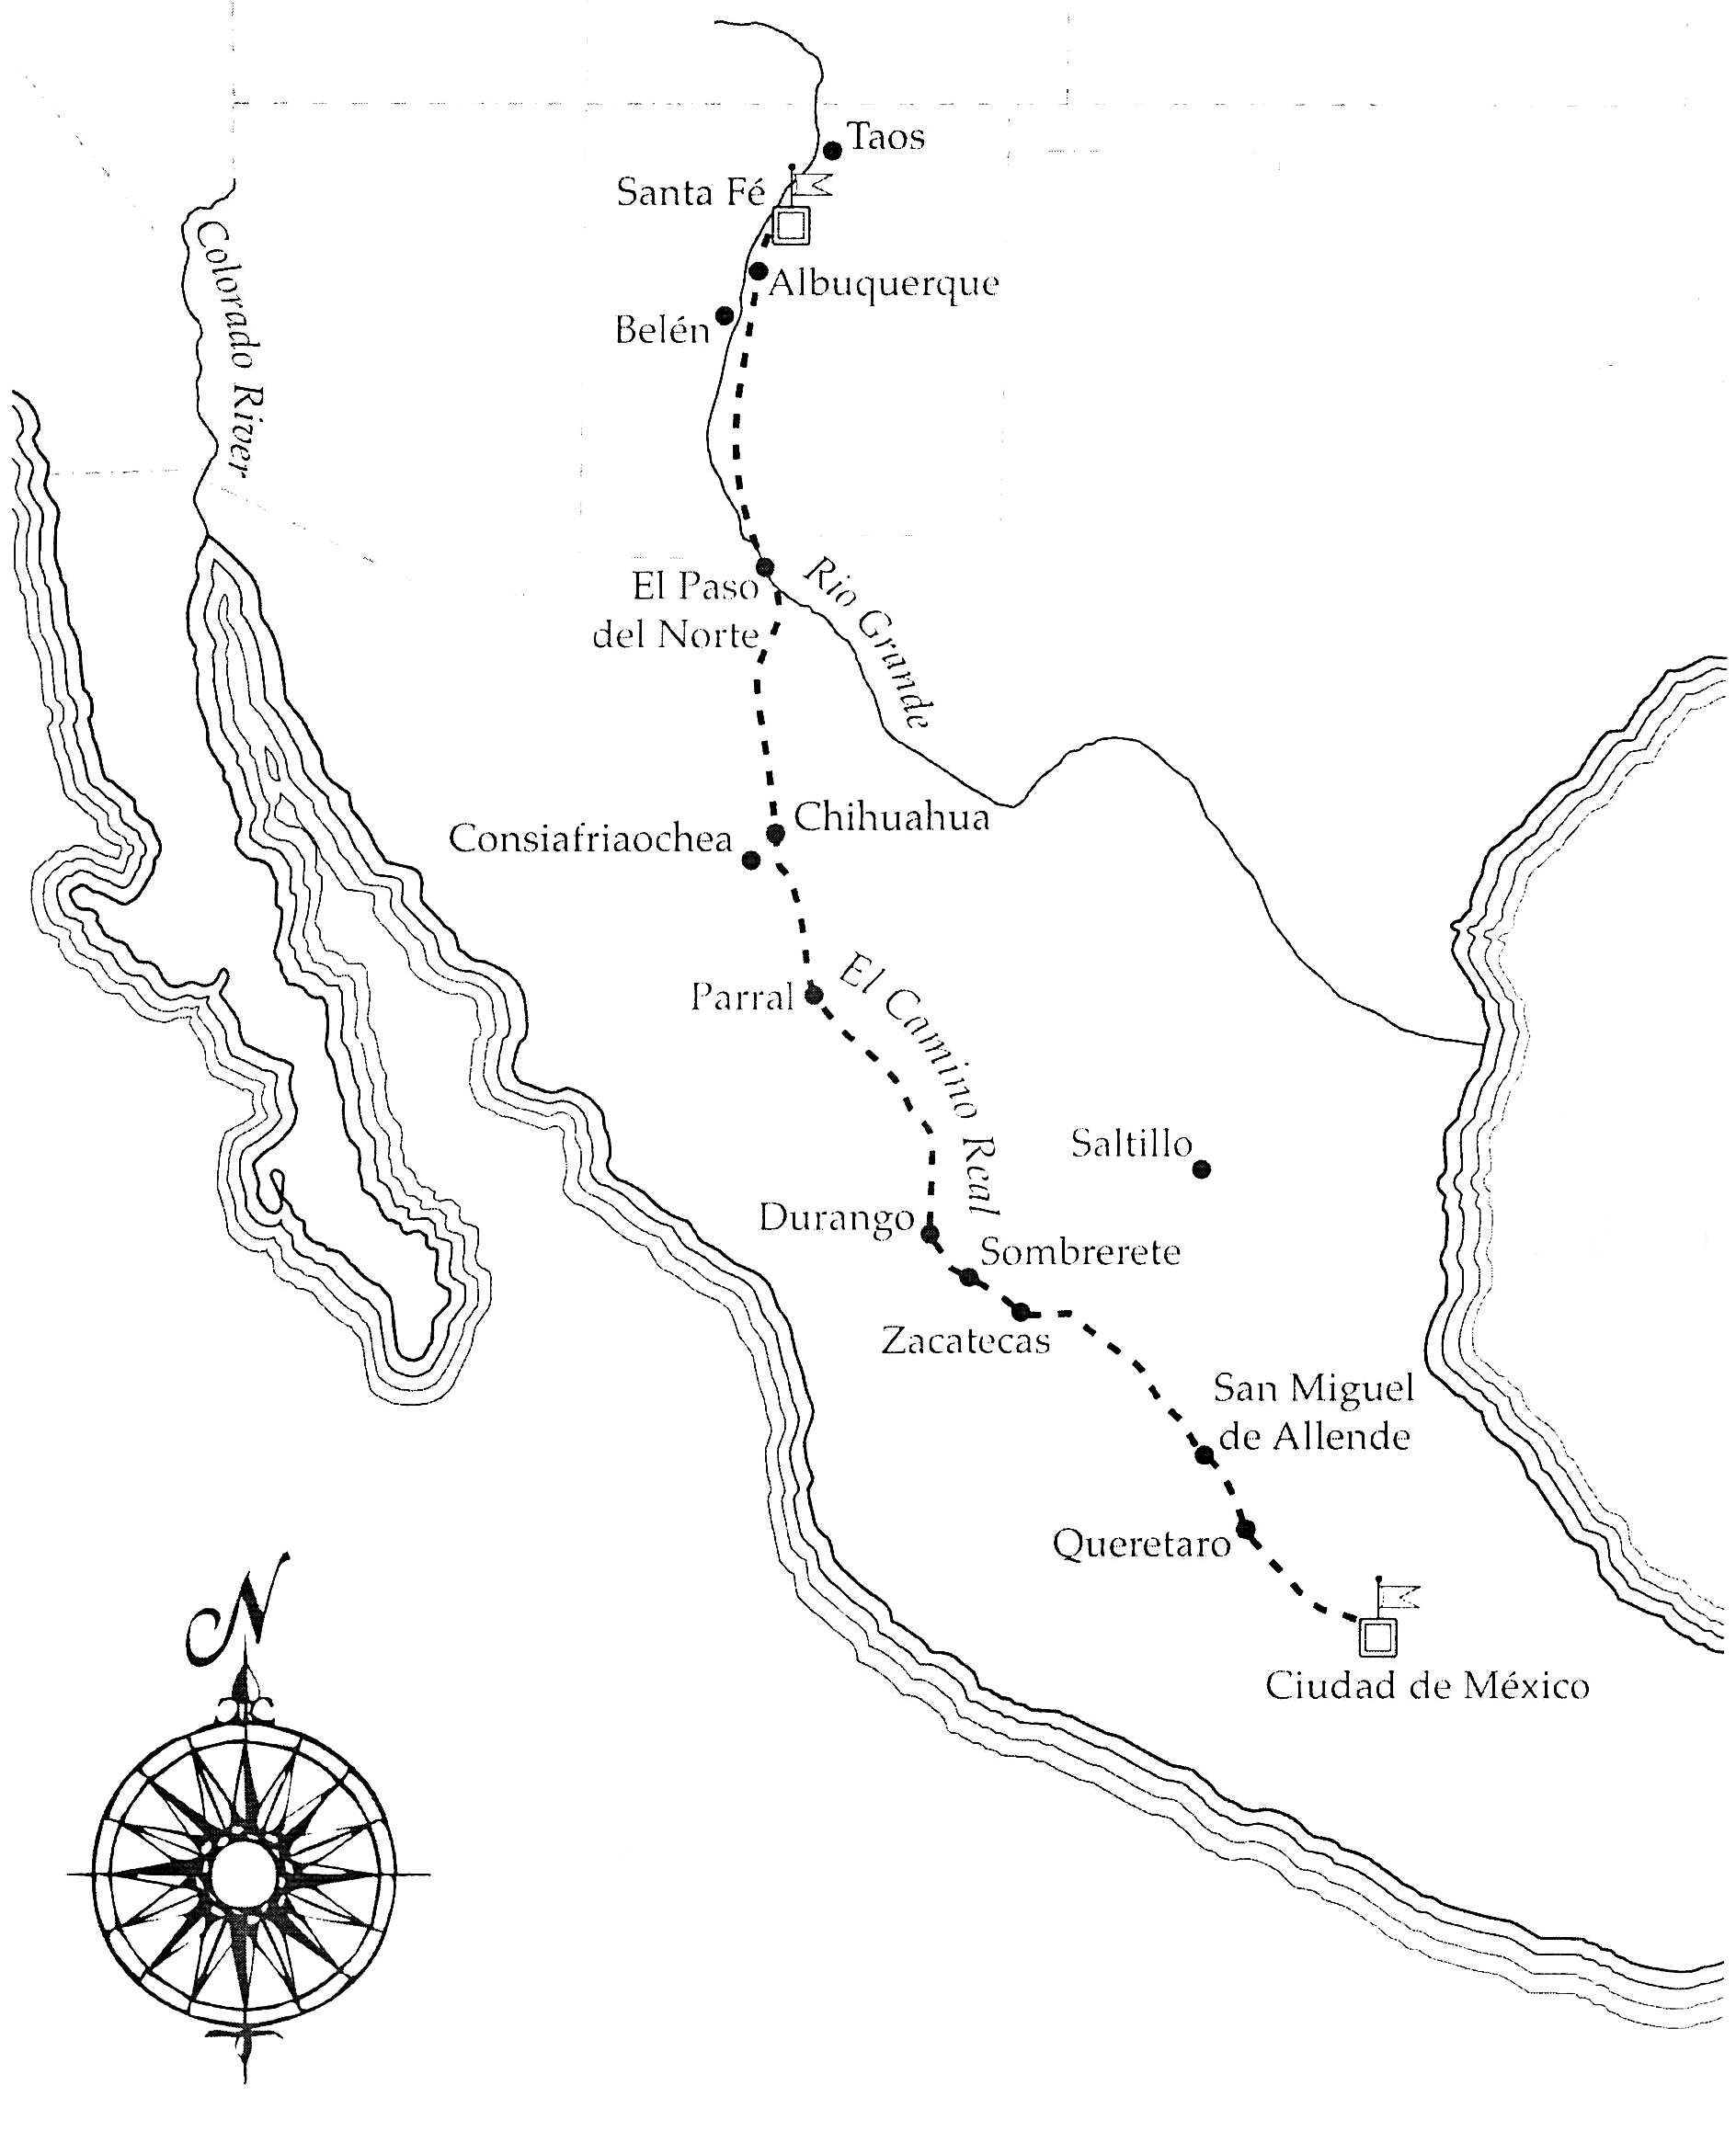 26 - Prisidios (Map 4)